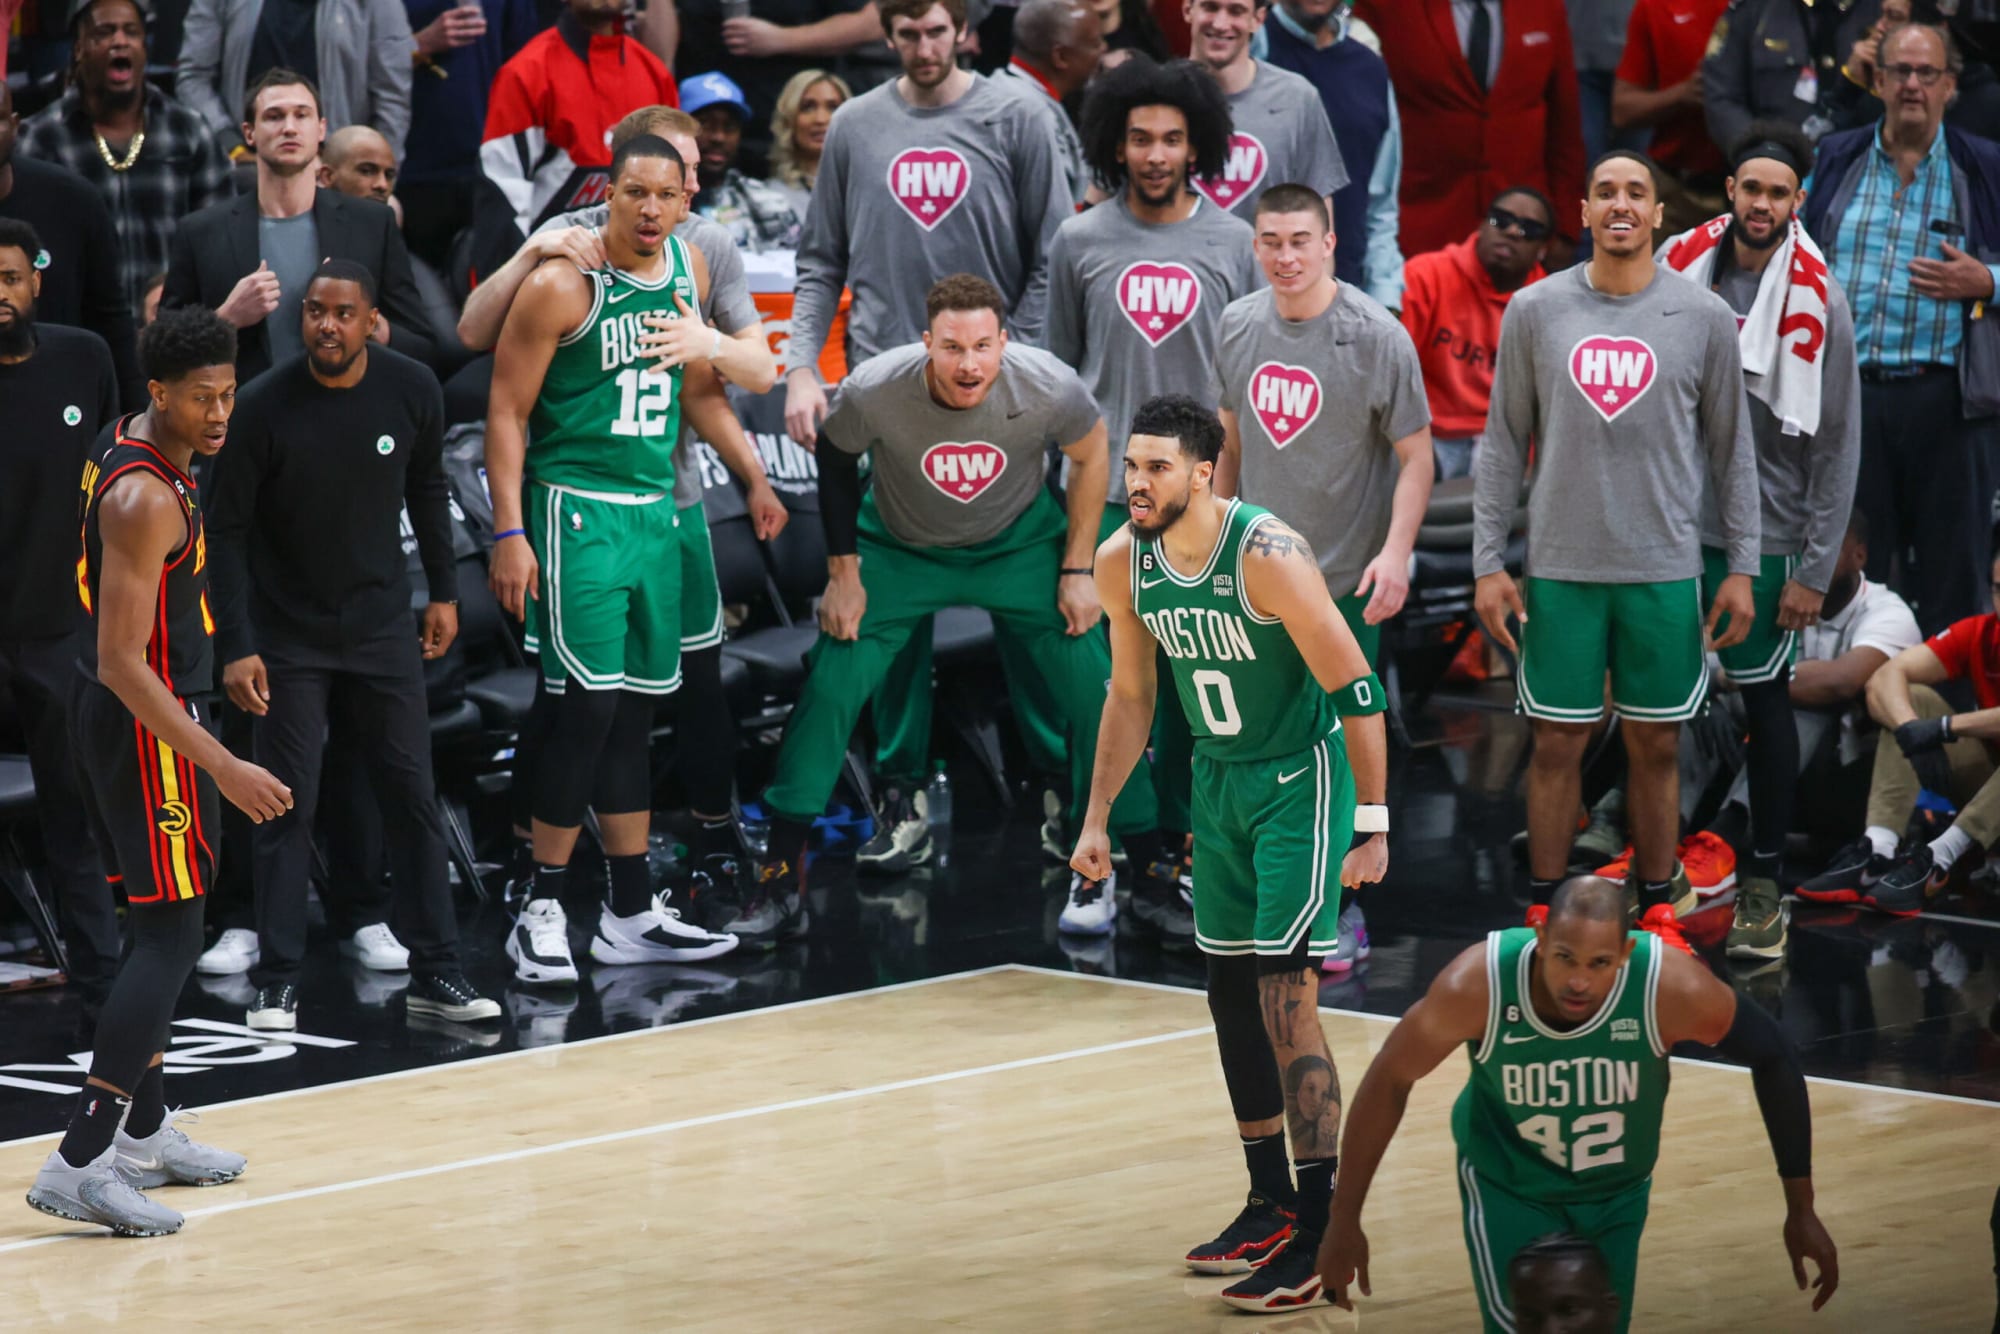 The Boston Celtics roster explained through Superheroes - BVM Sports